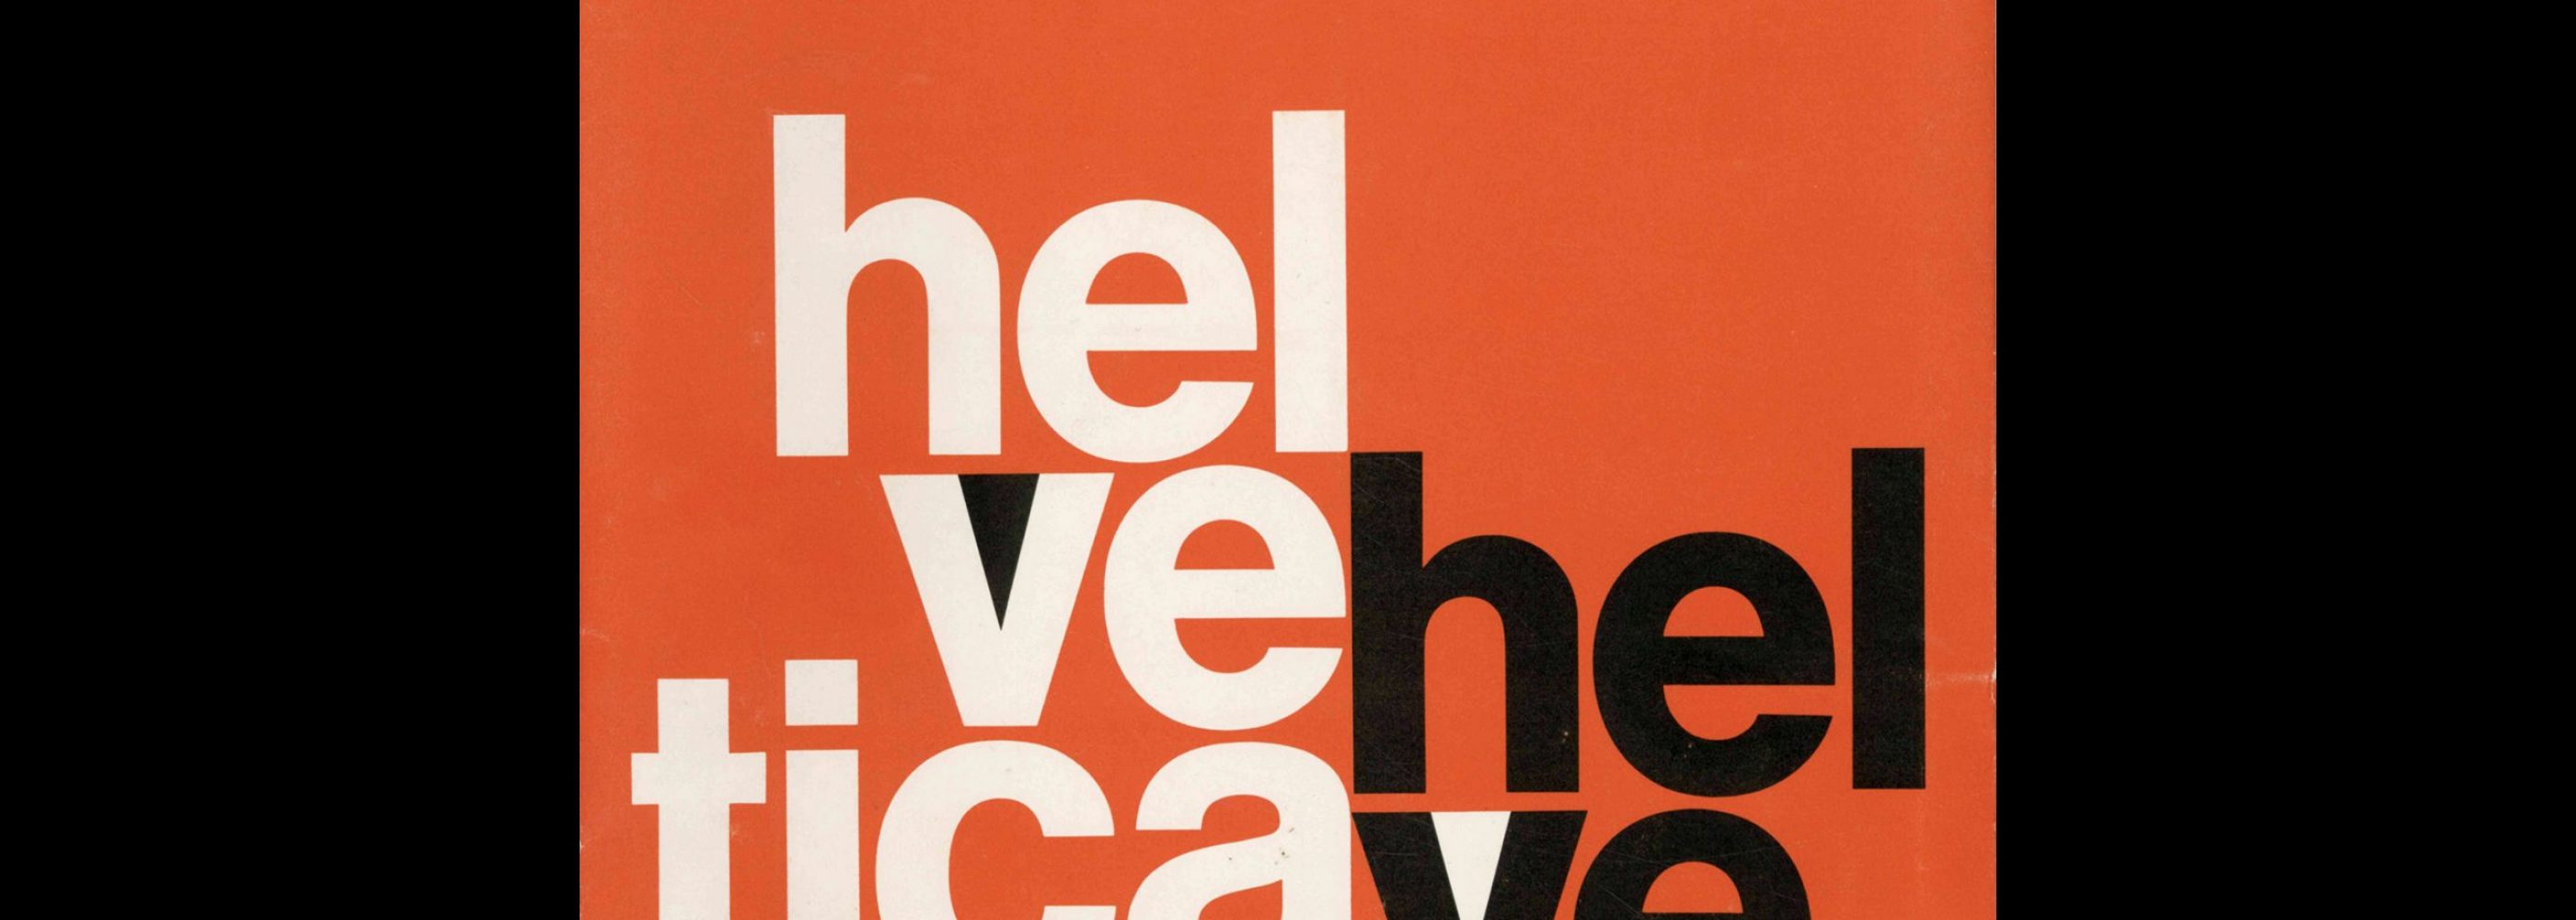 Helvetica, D. Stempel AG, Frankfurt am Main, 1960s